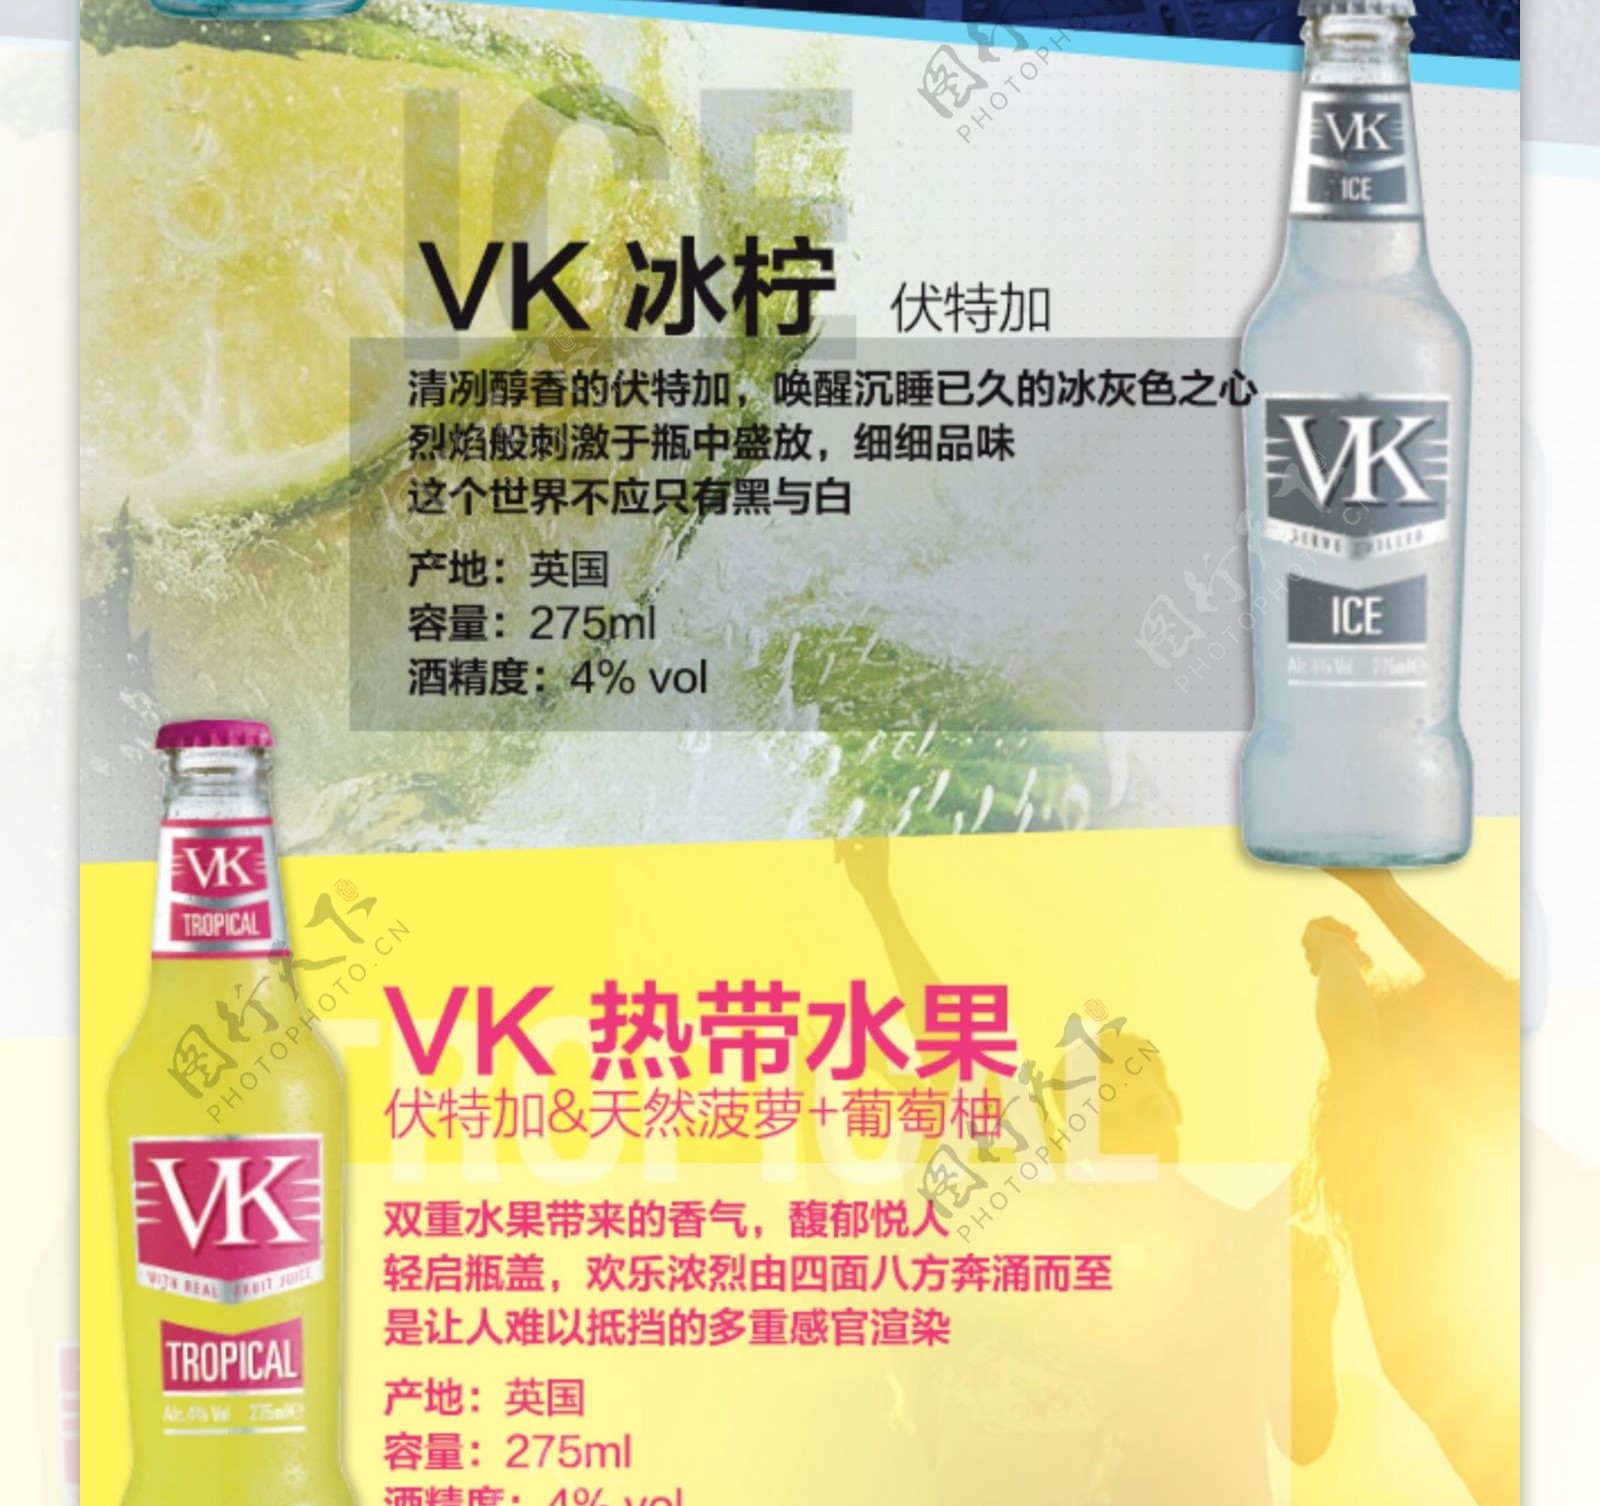 VK产品页